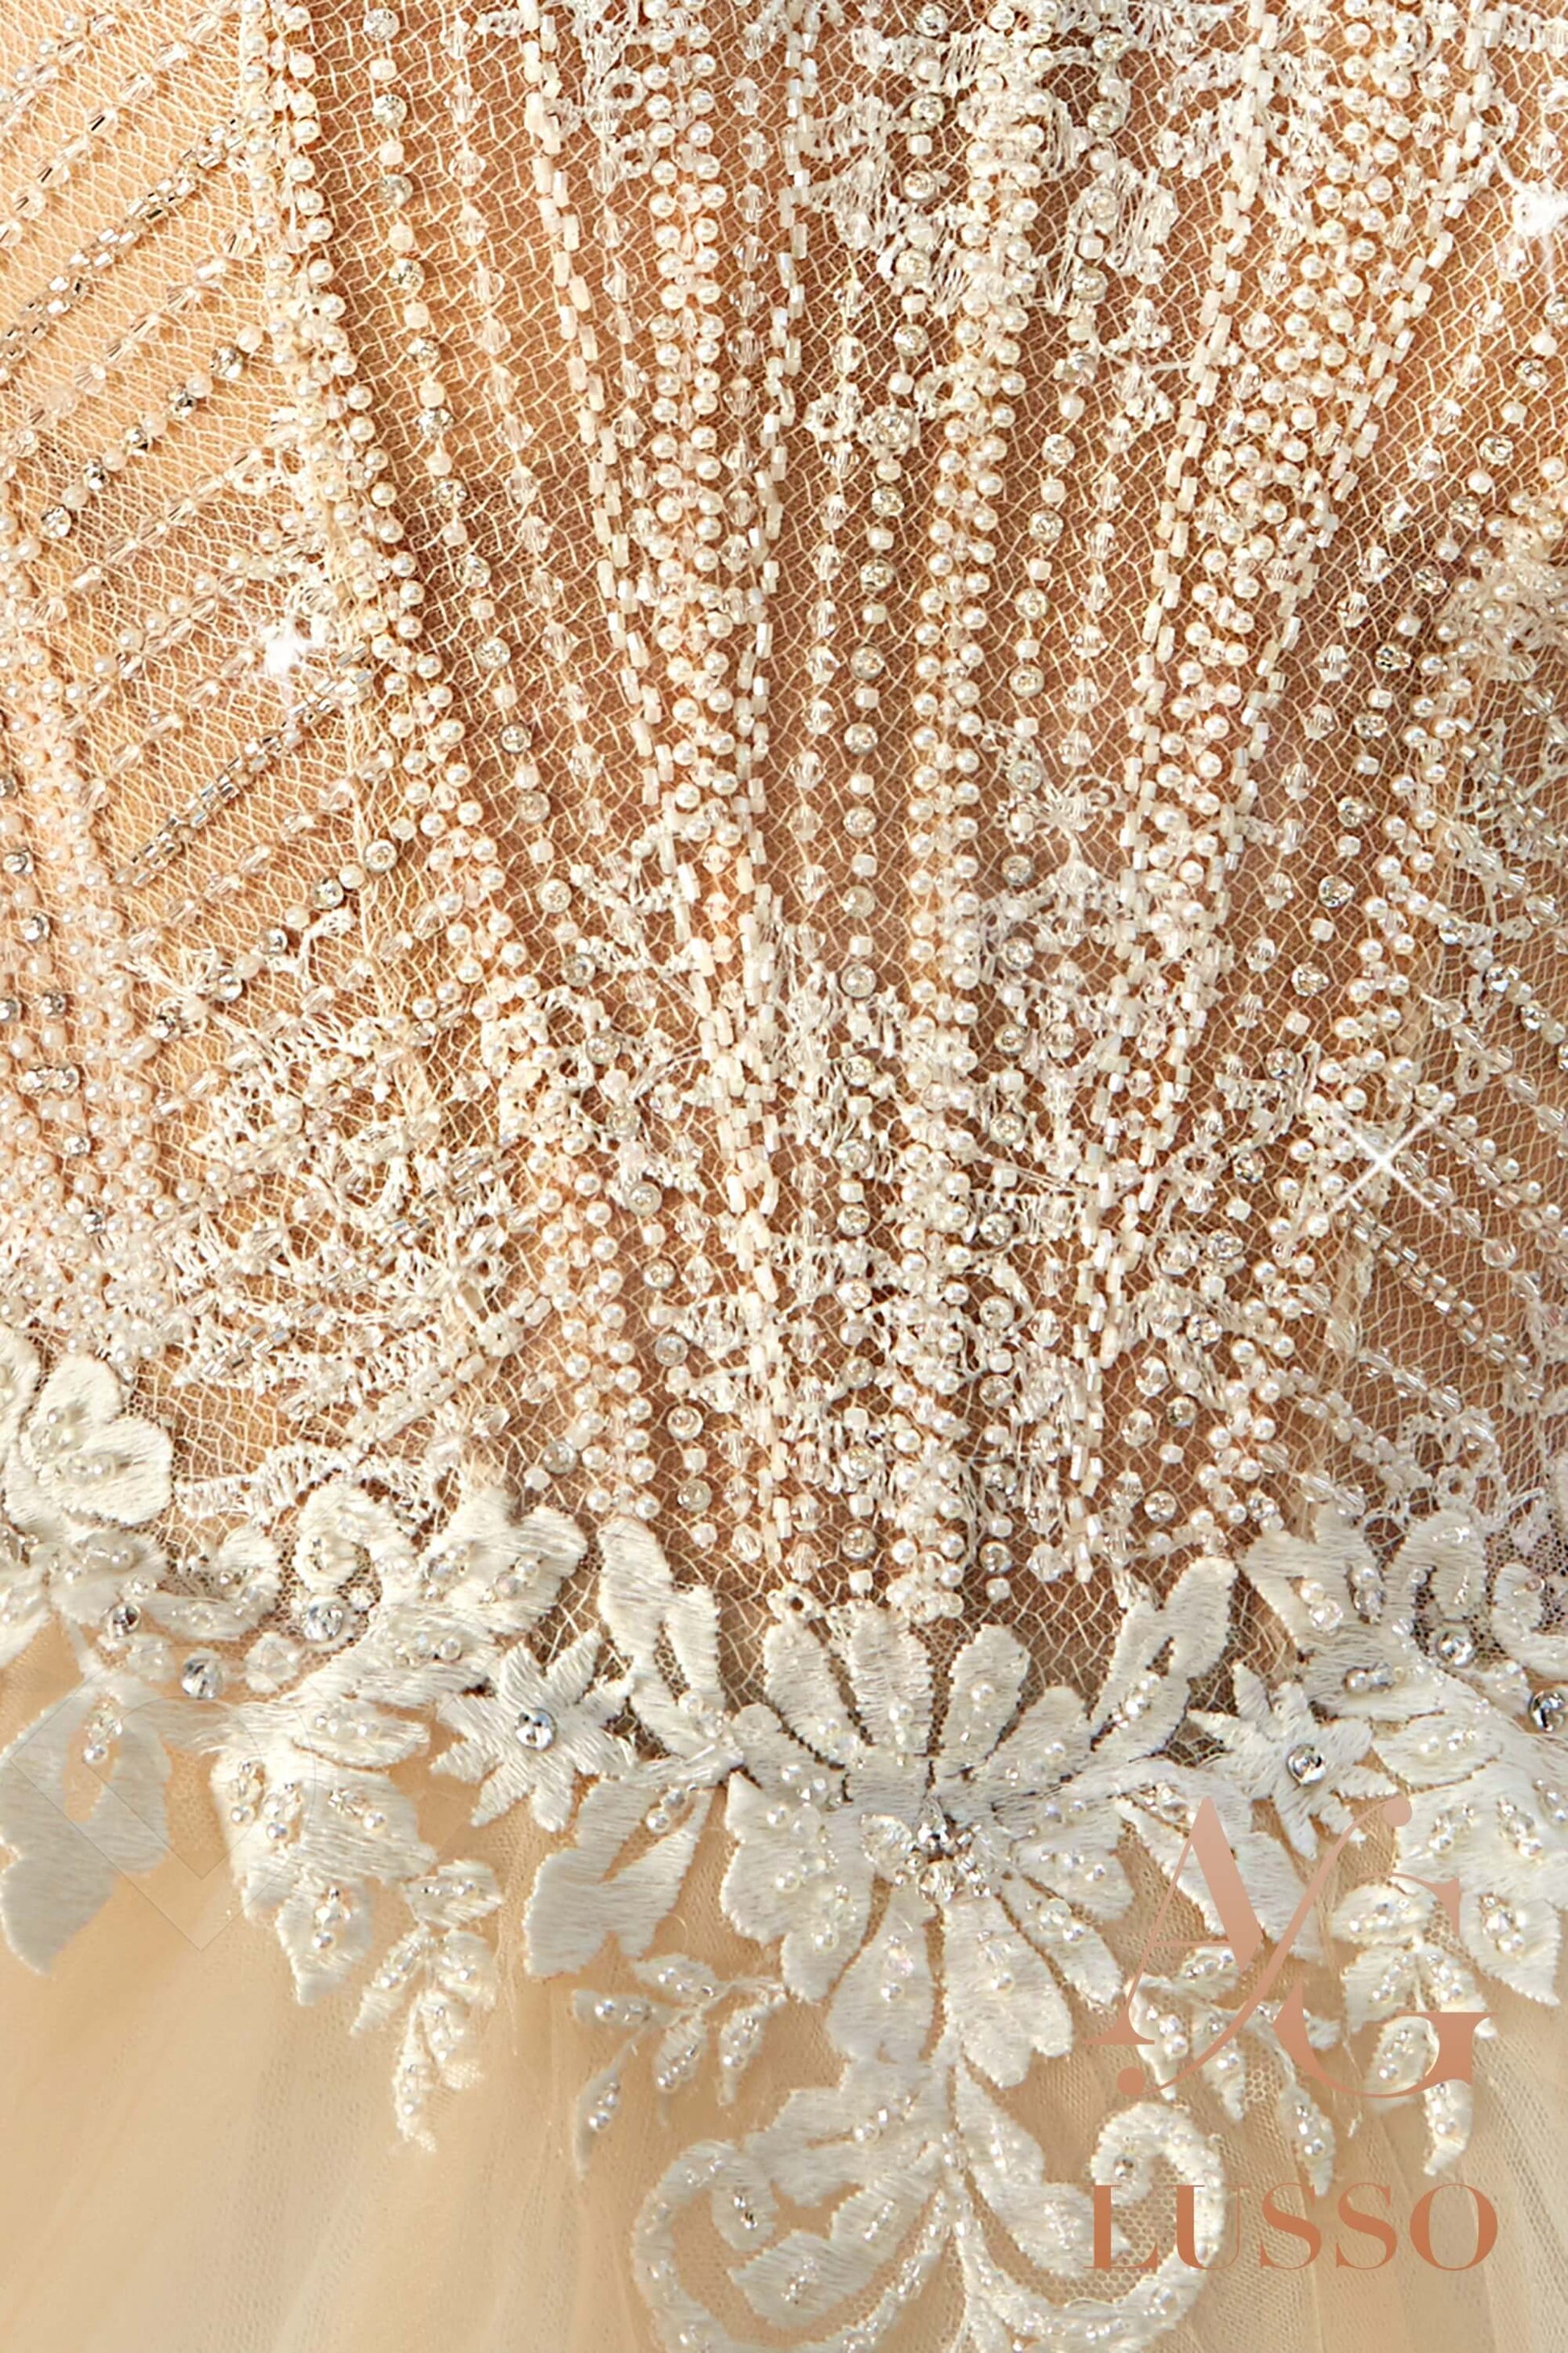 Arna Princess/Ball Gown Jewel Cappuccino Wedding dress